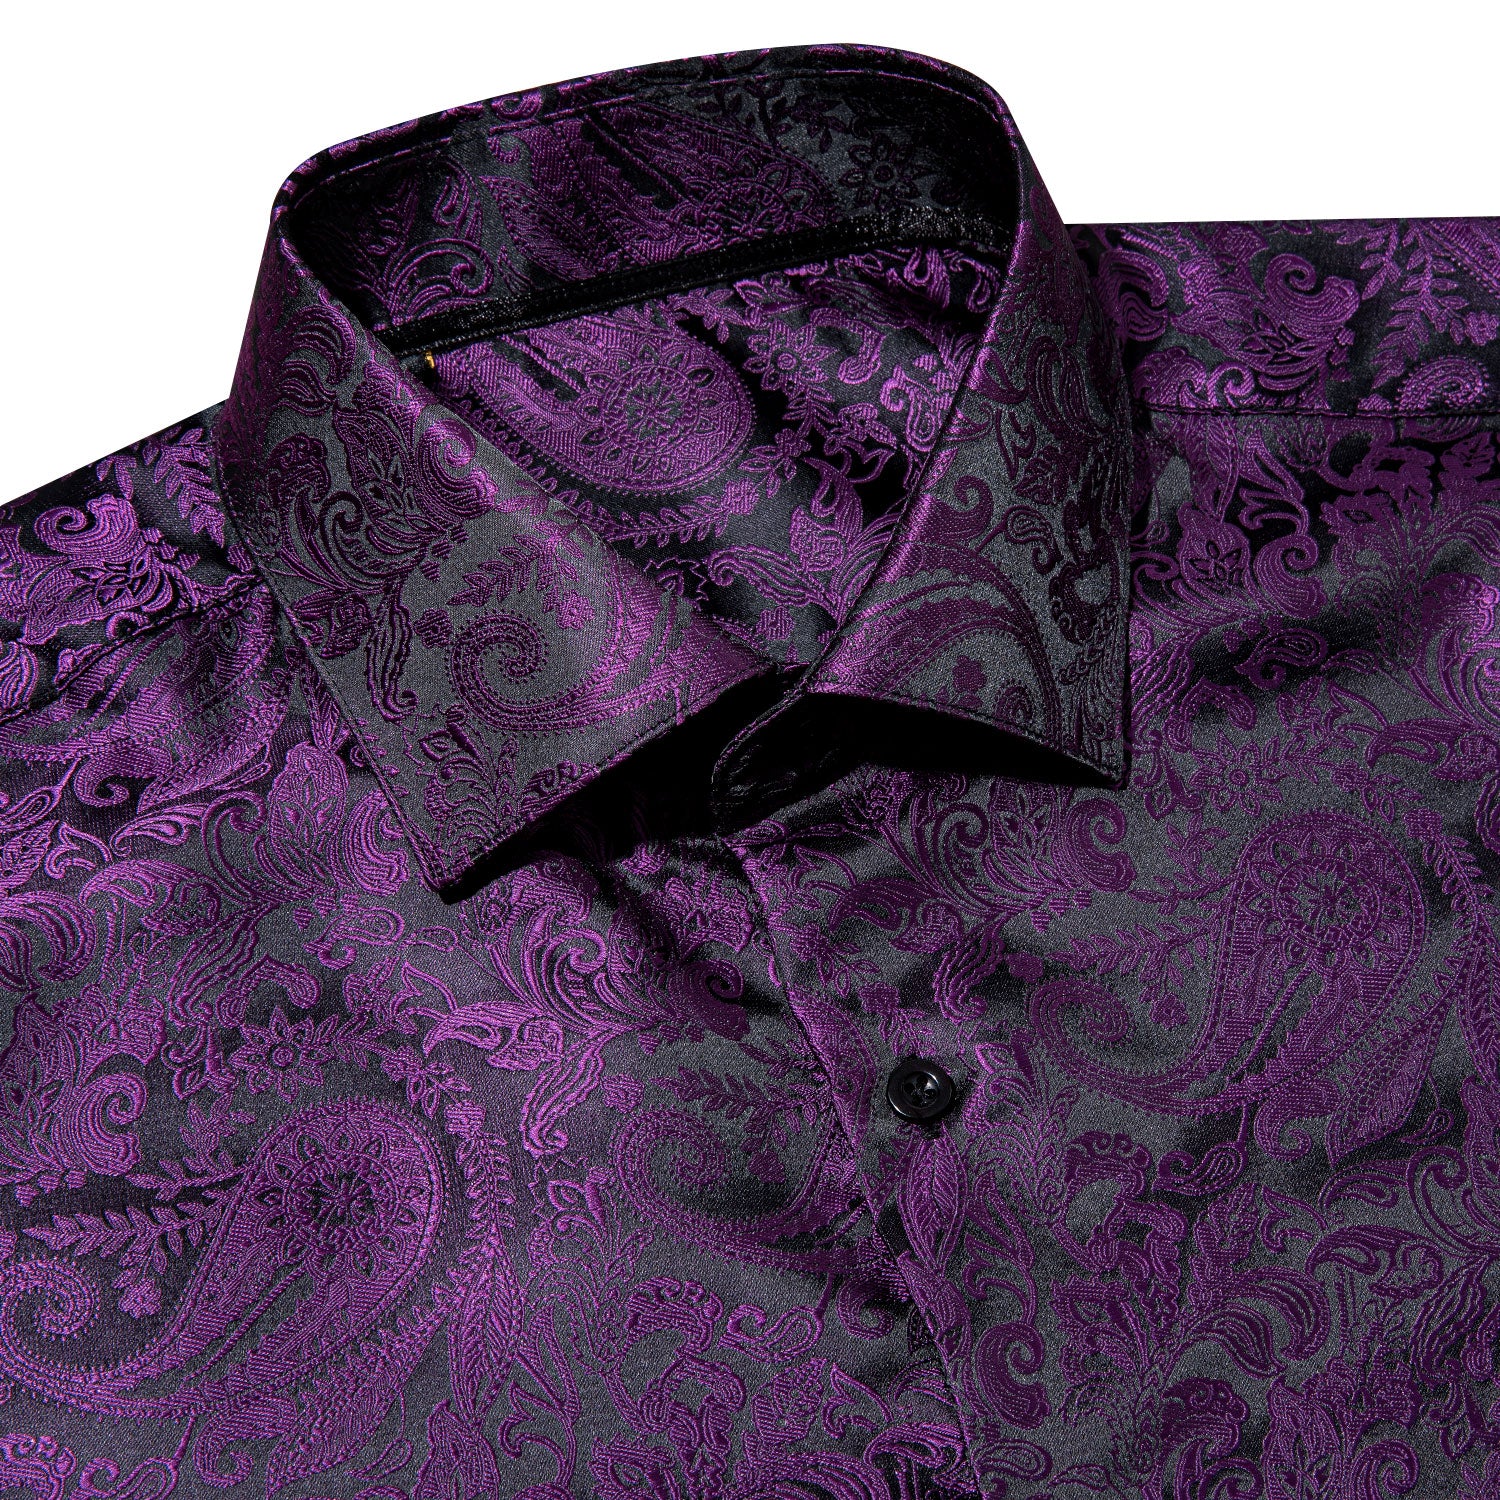 Barry.wang Button Down Shirt Purple Black Paisley Dress Shirtmen's lined shirt jacket